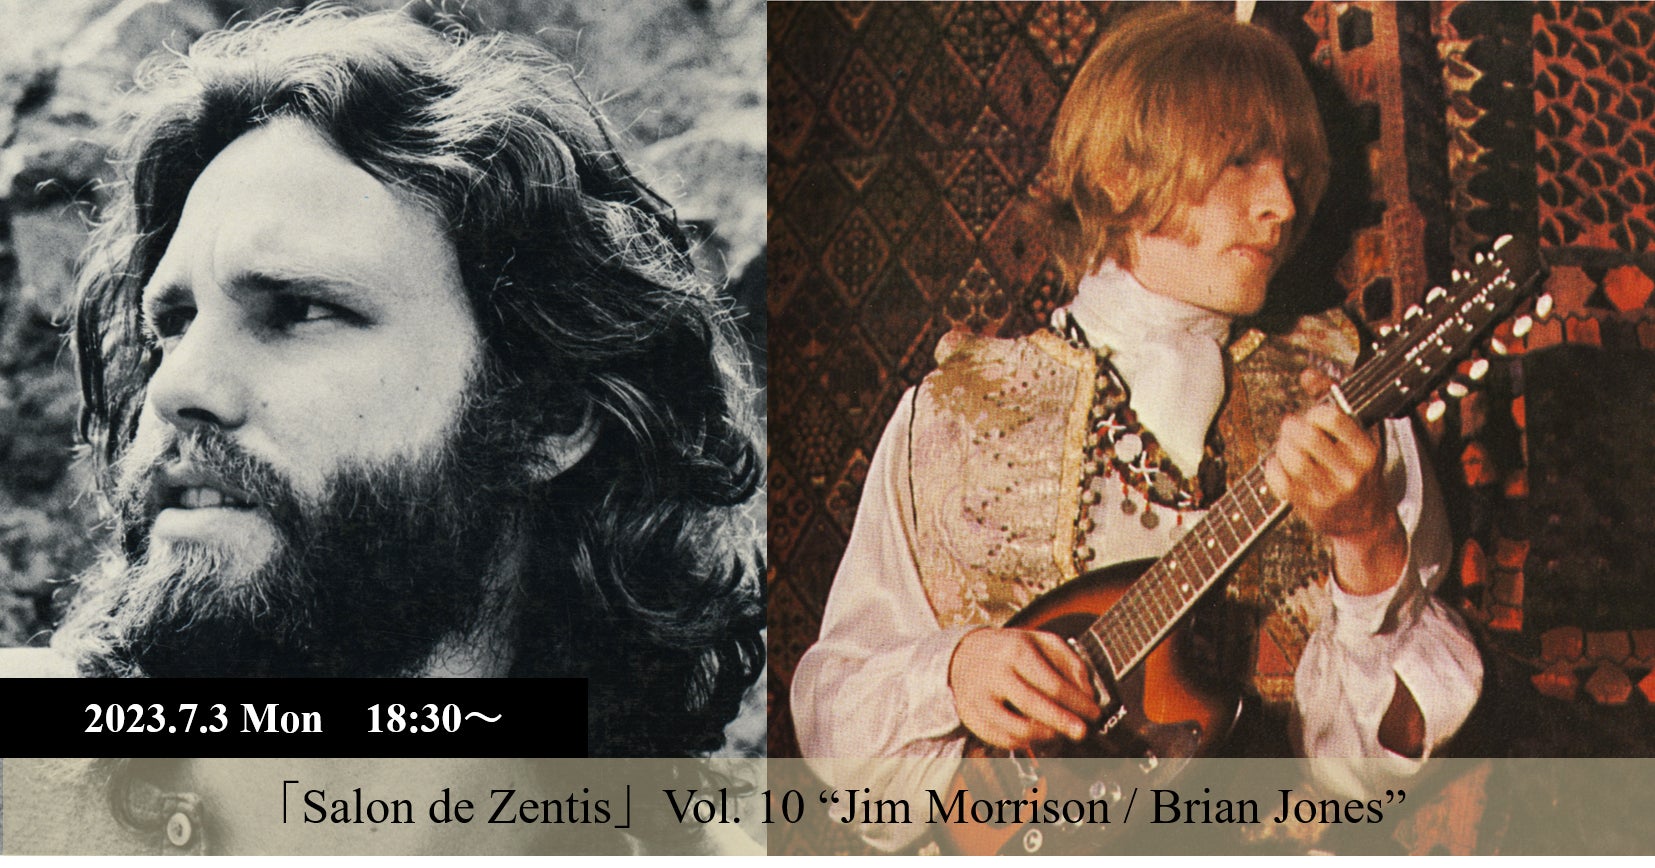 「Salon de Zentis」Vol. 10 “Jim Morrison / Brian Jones”